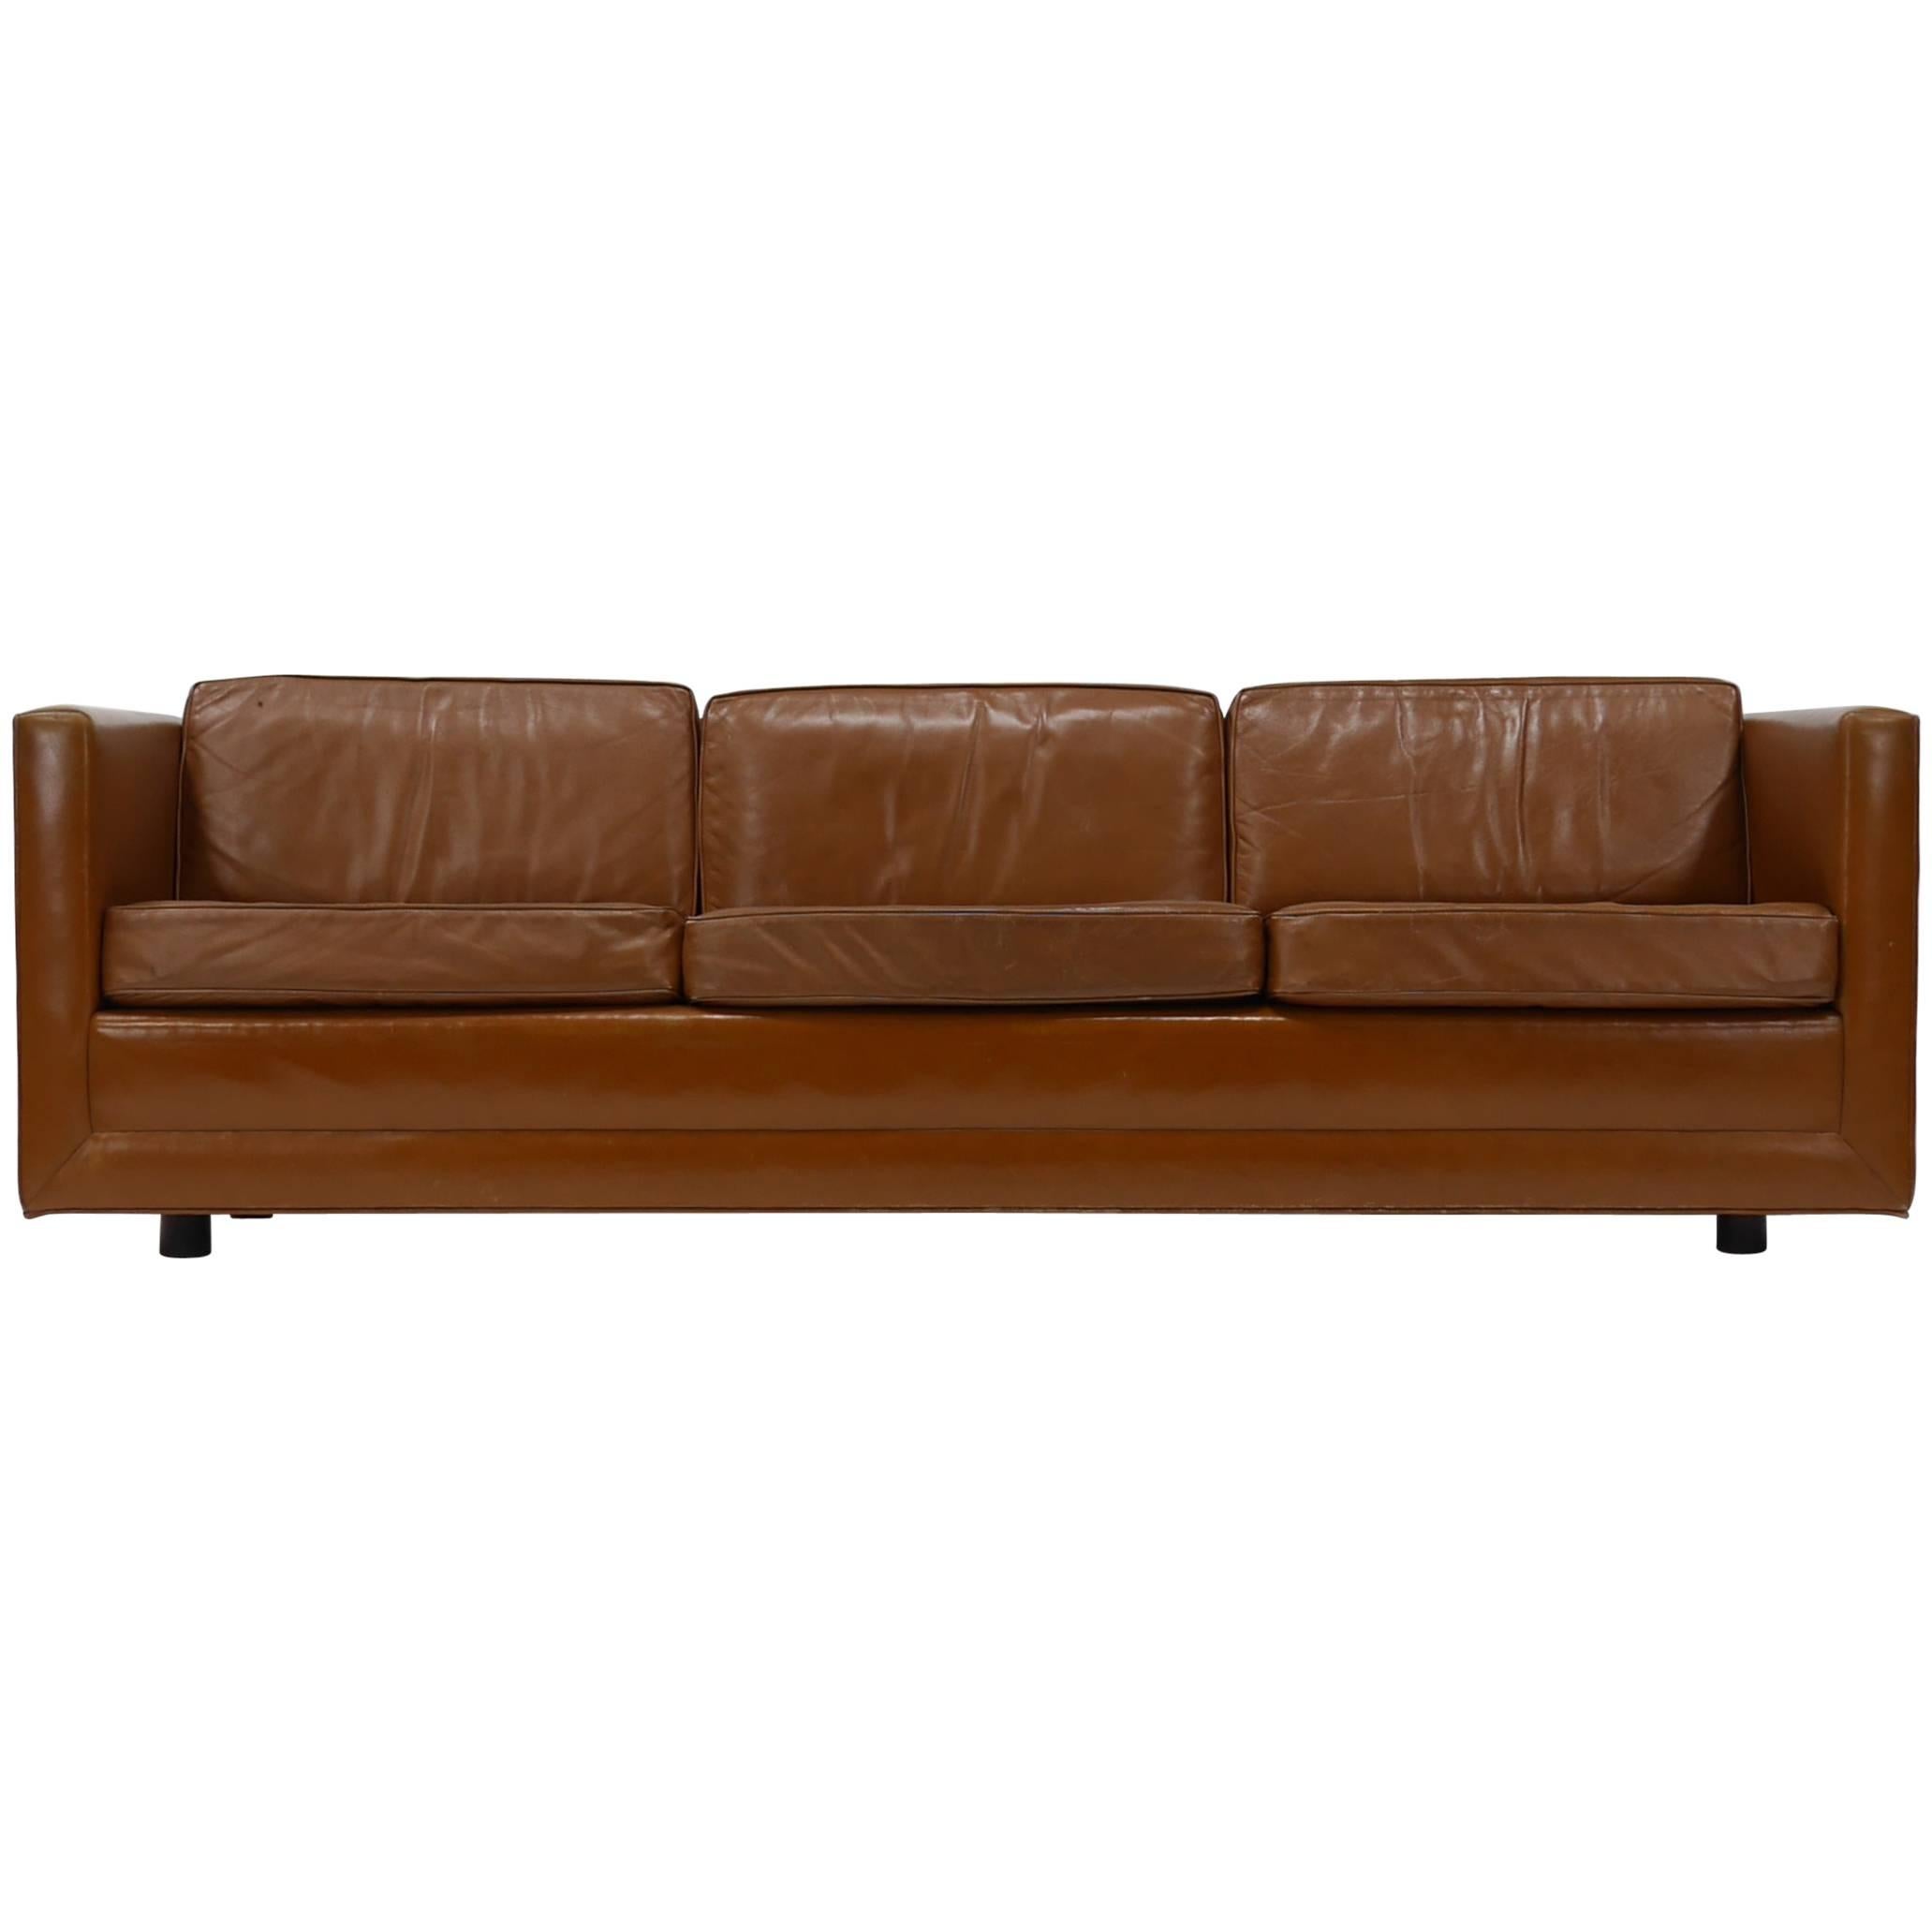 Leather Tuxedo Sofa by Harvey Probber